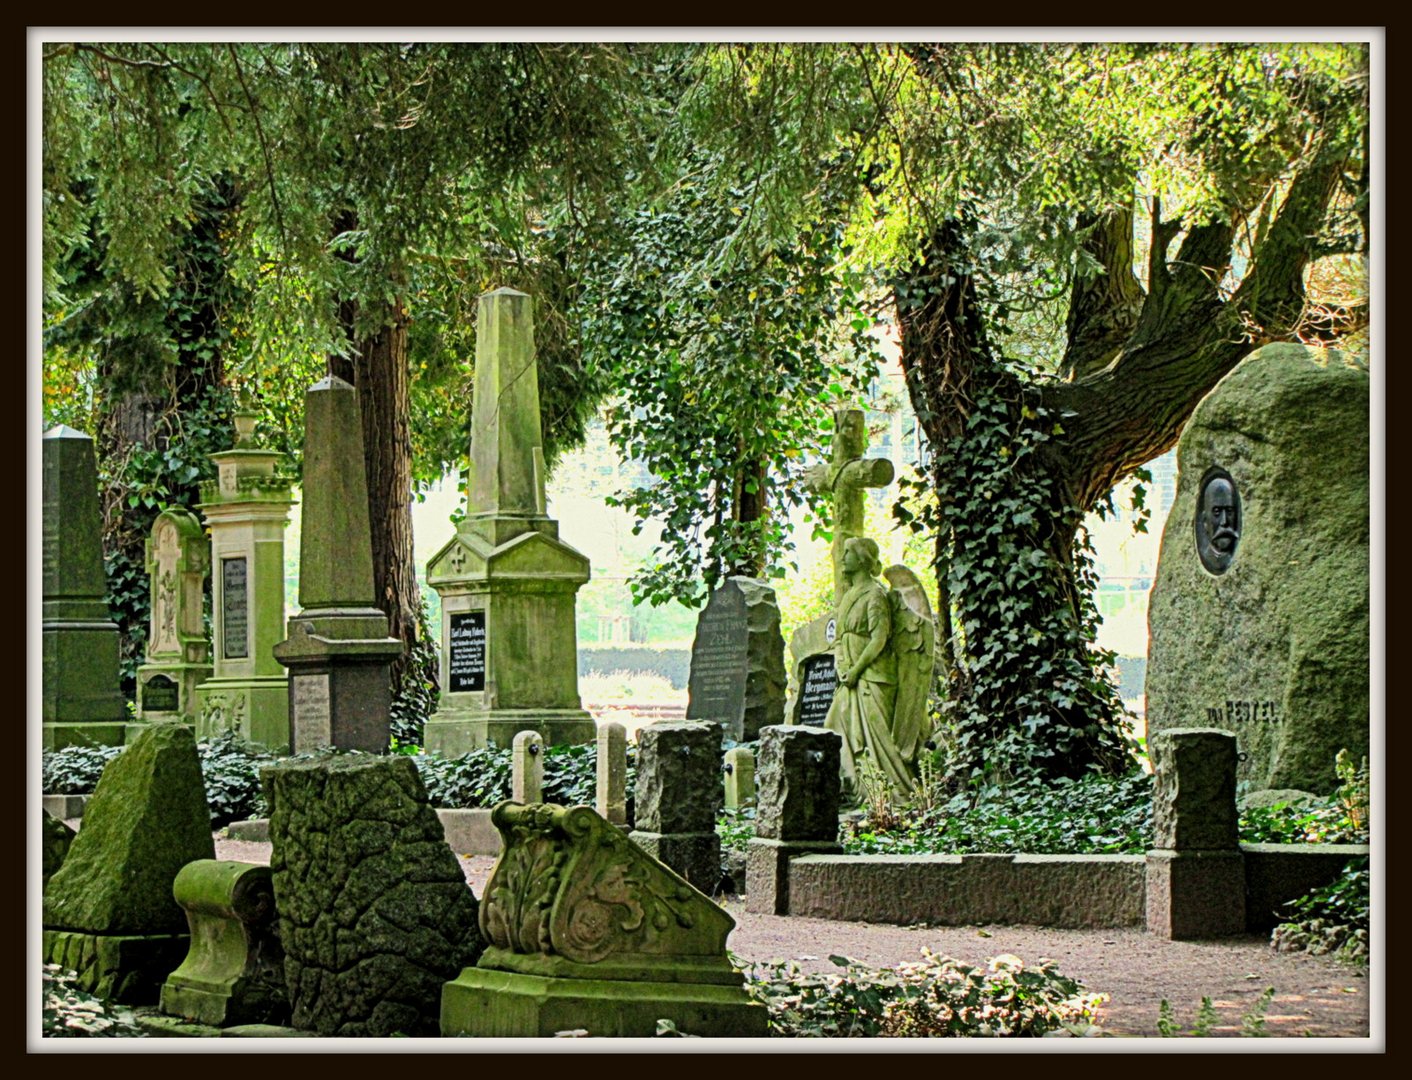 DFG Saarbrücken alter Friedhof